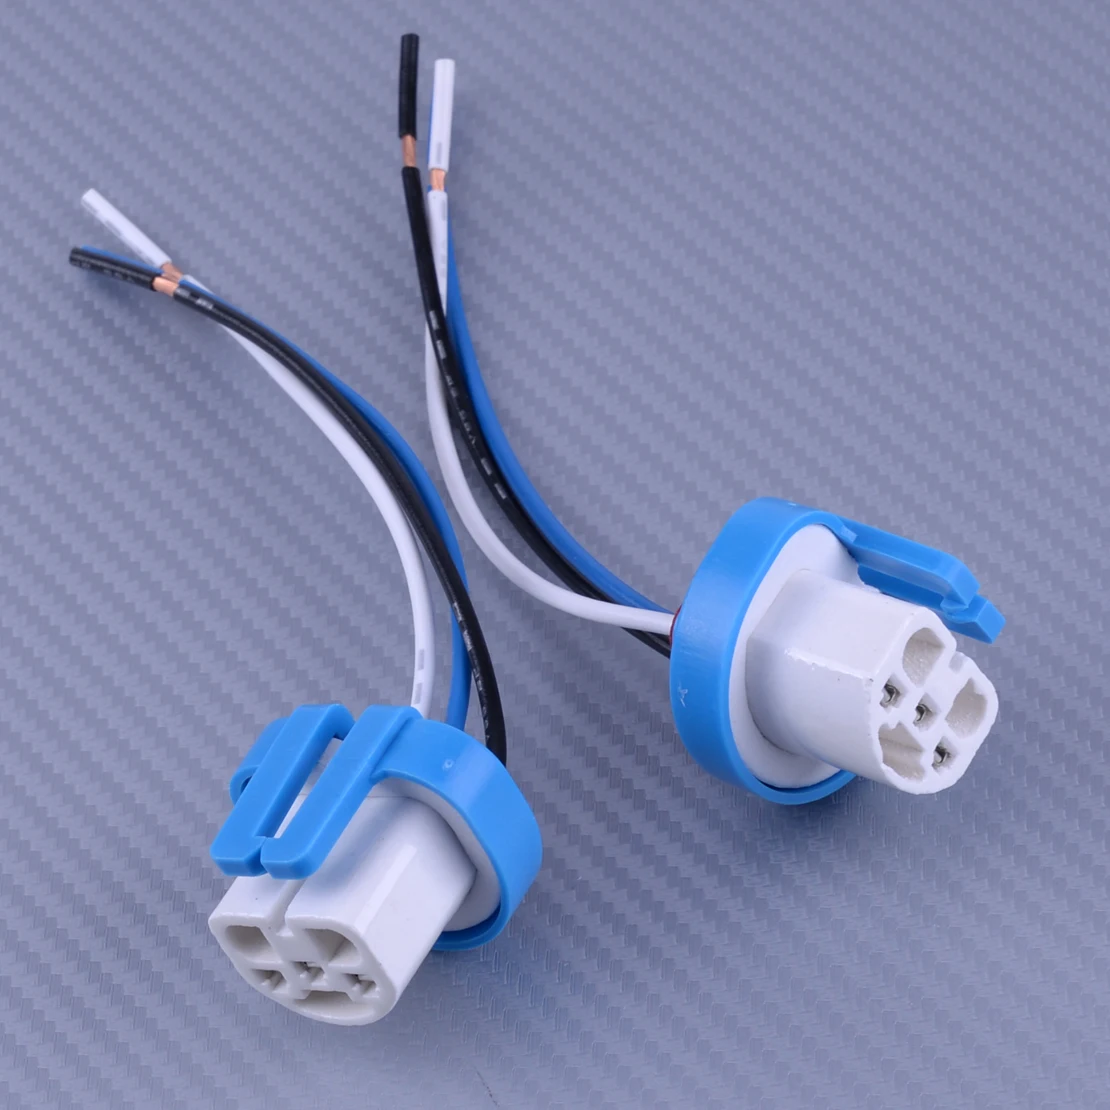 

DWCX New 2pcs 9007 9004 Headlight Wiring Adapter Harness Connector Pigtail Female Plug Bulb Socket